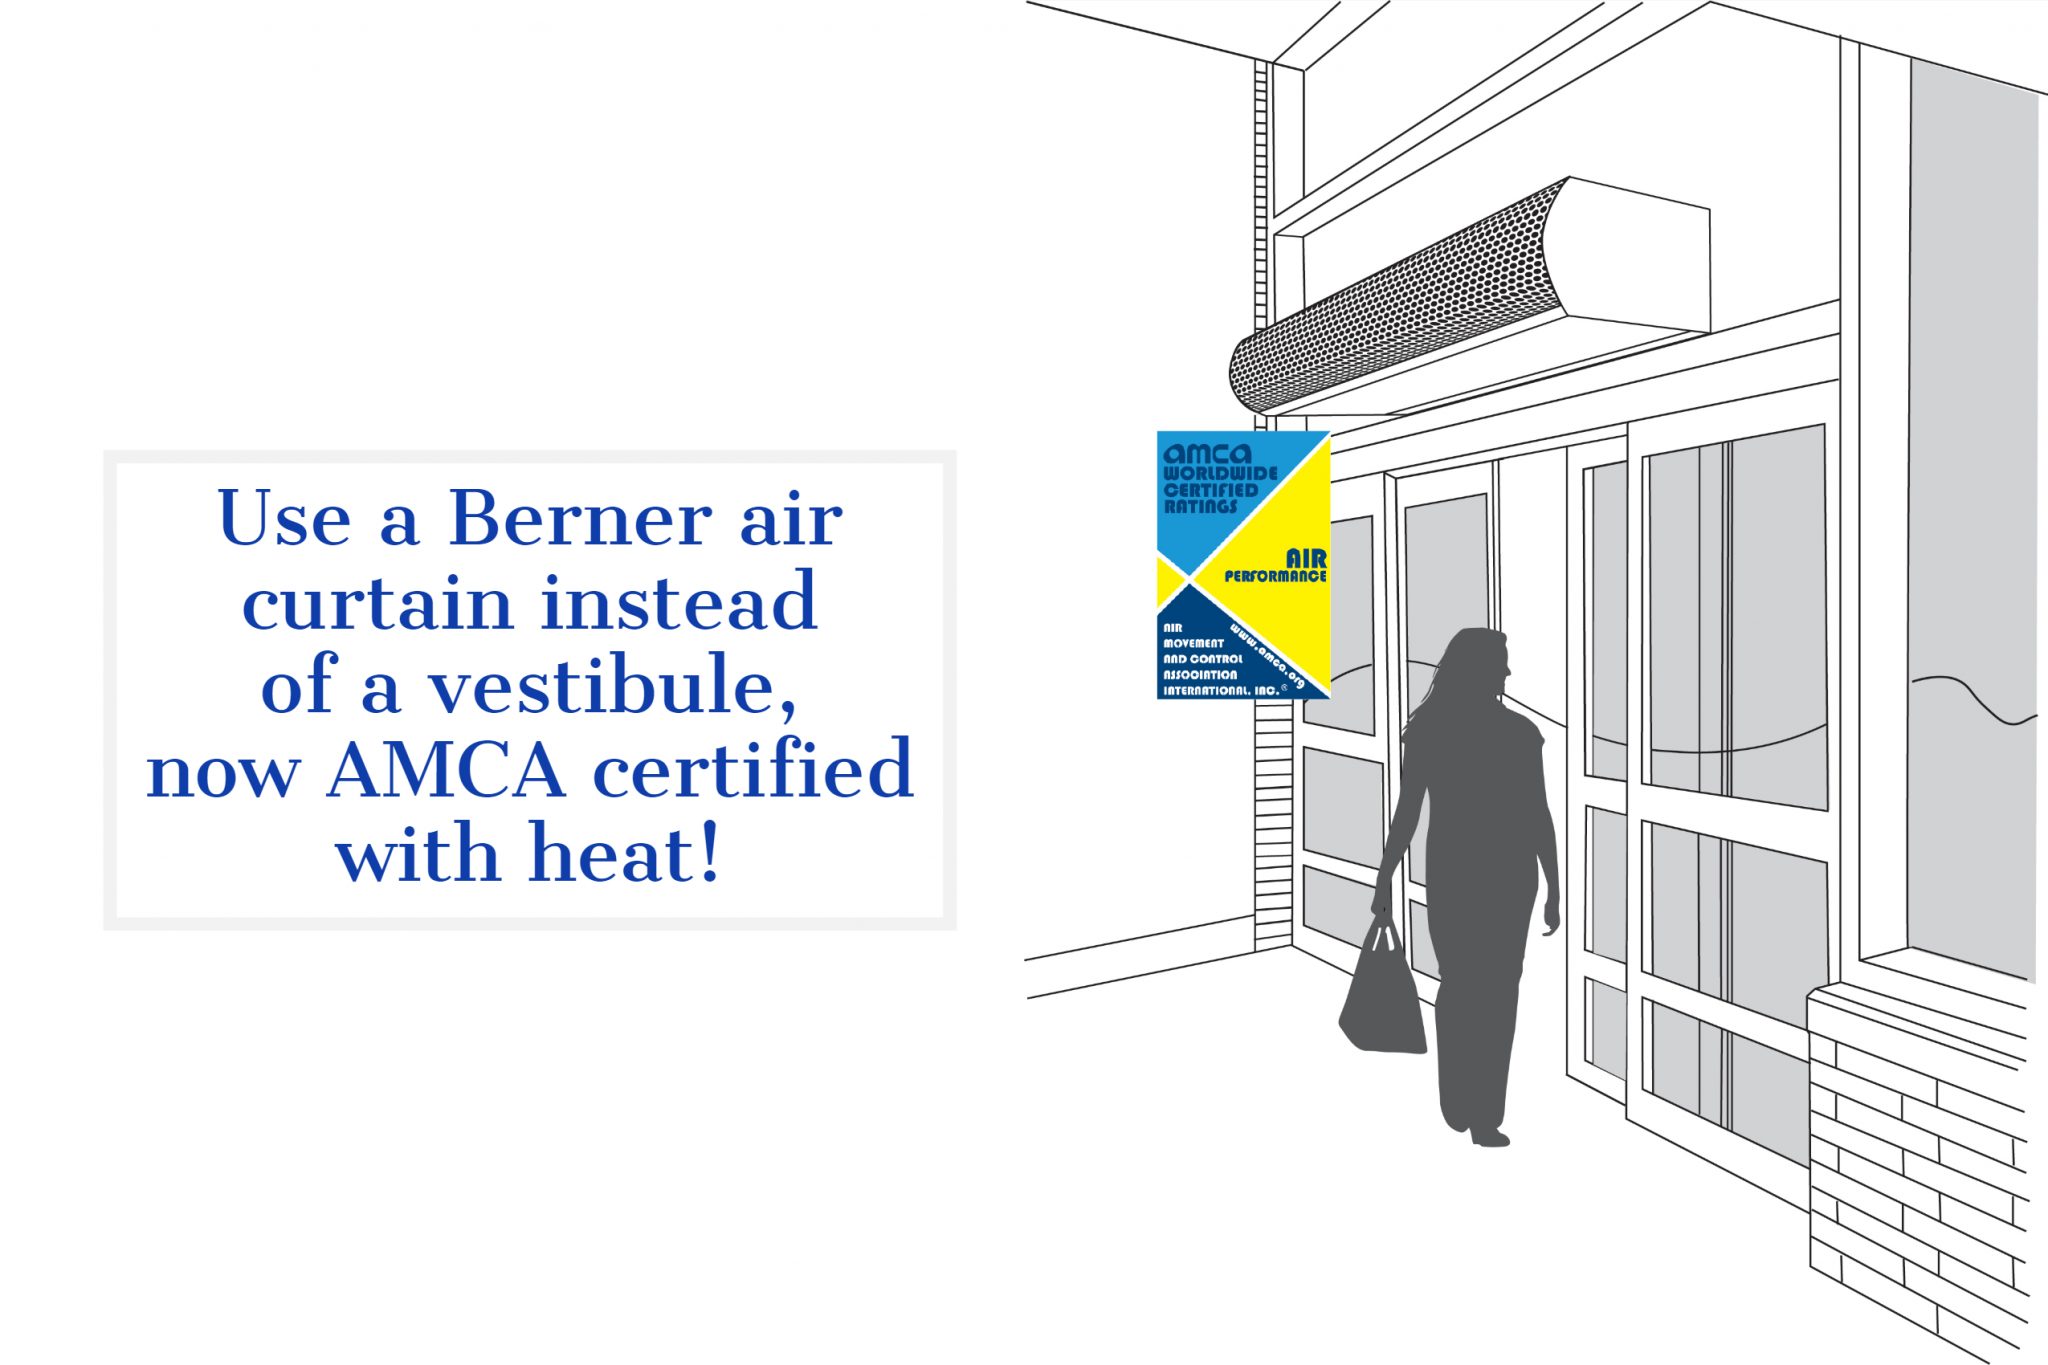 Use a Berner air curtain instead of a vestibule.